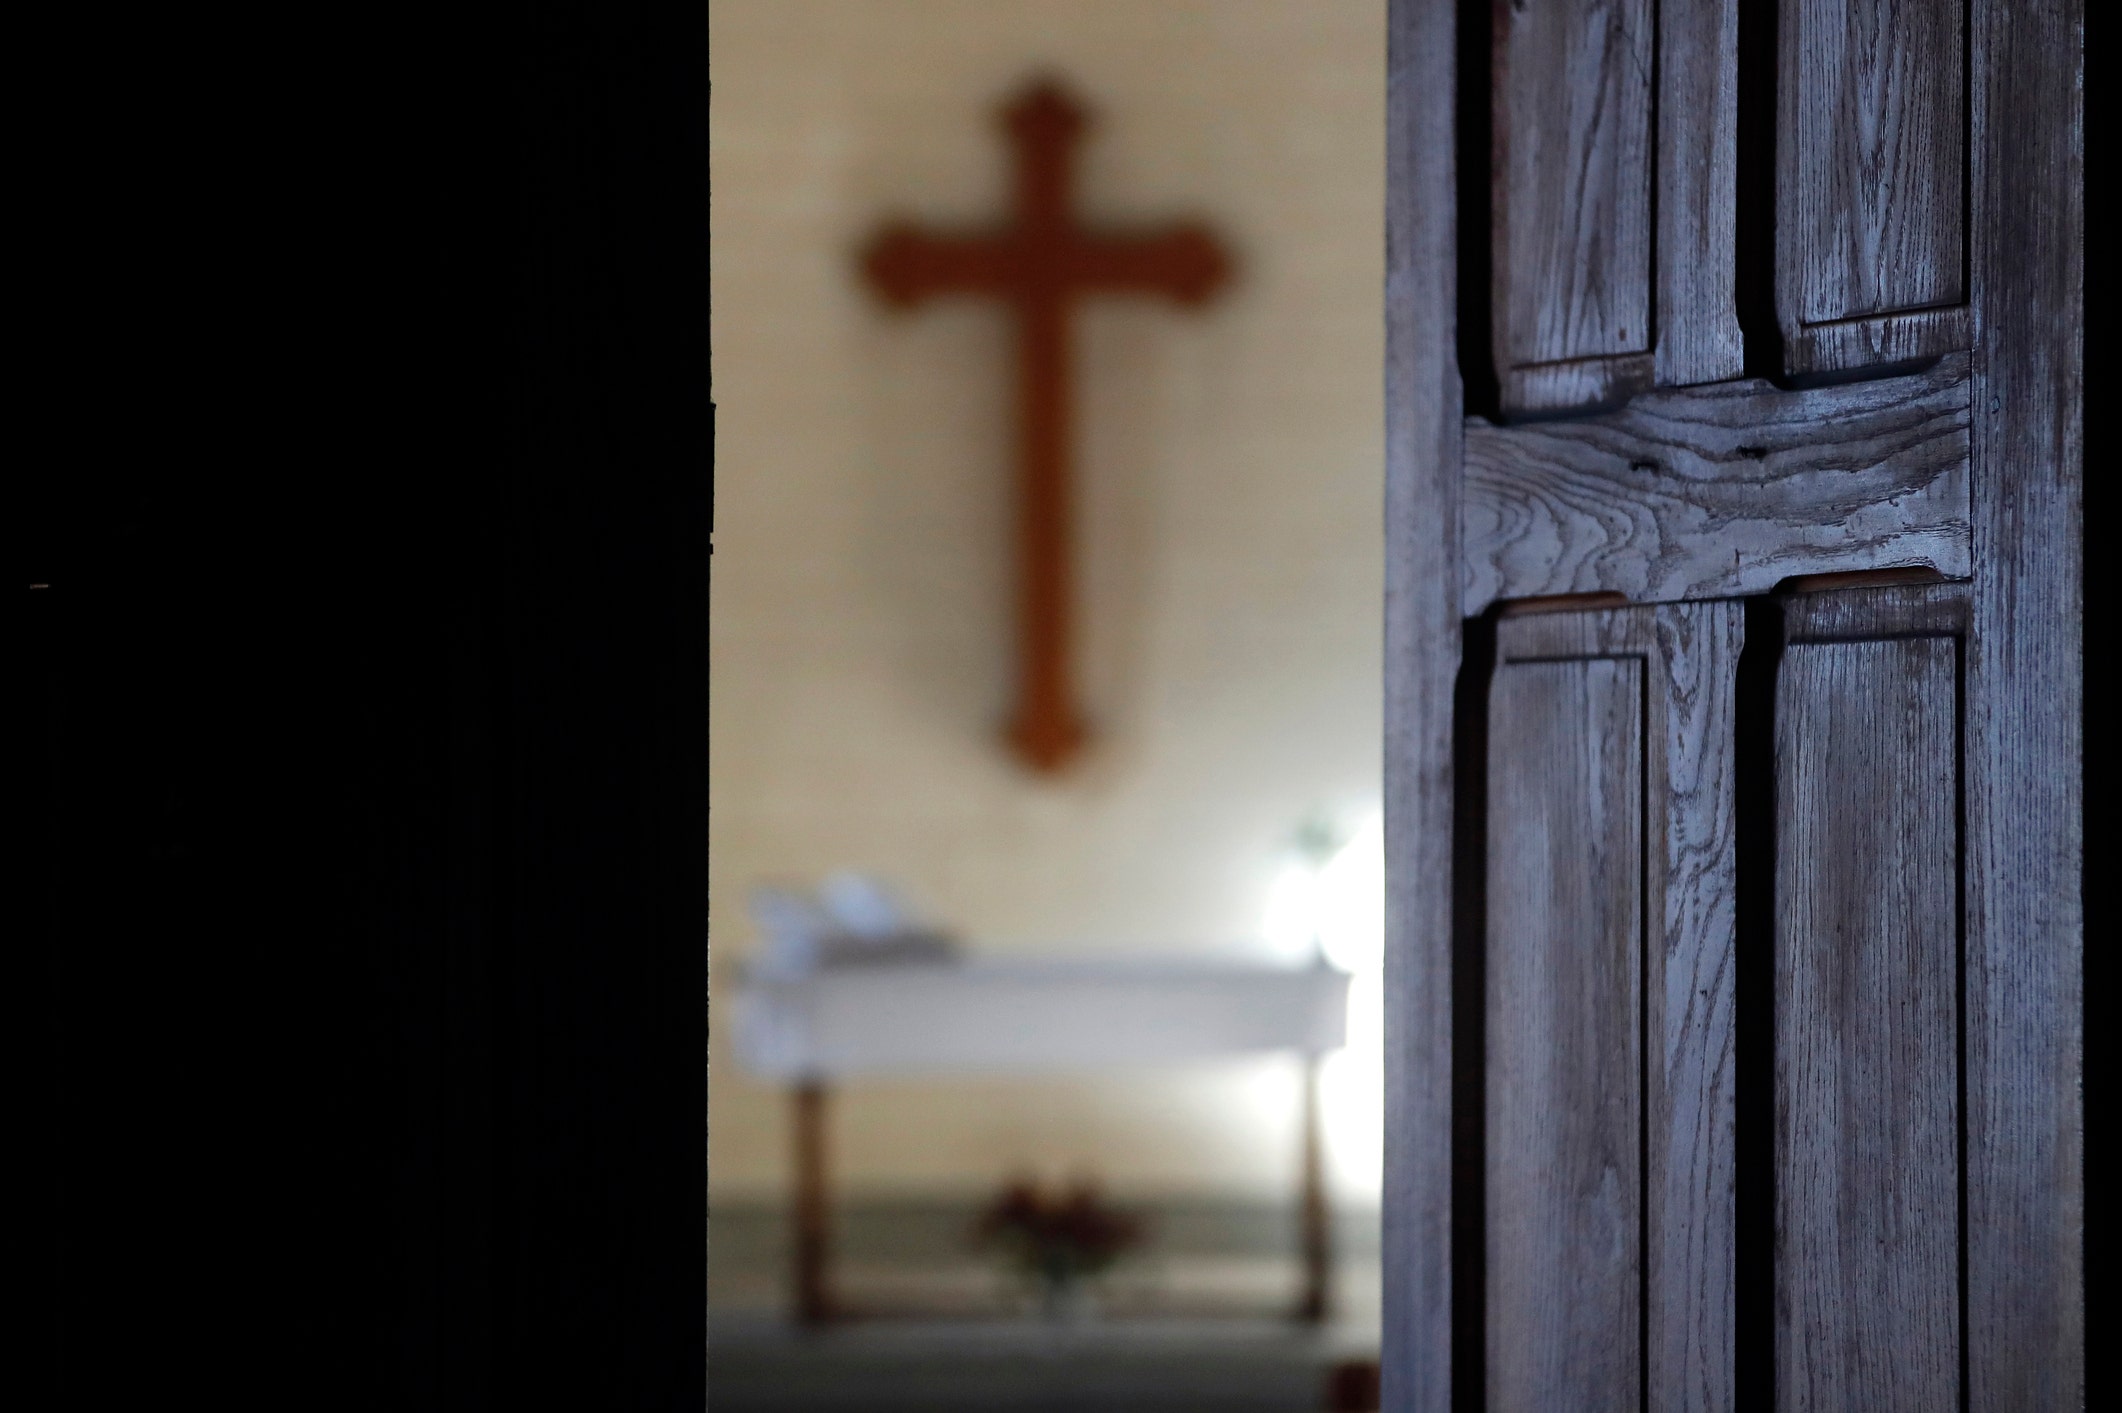 Religious watchdog groups warn secular society causing 'self-censorship' among Christians